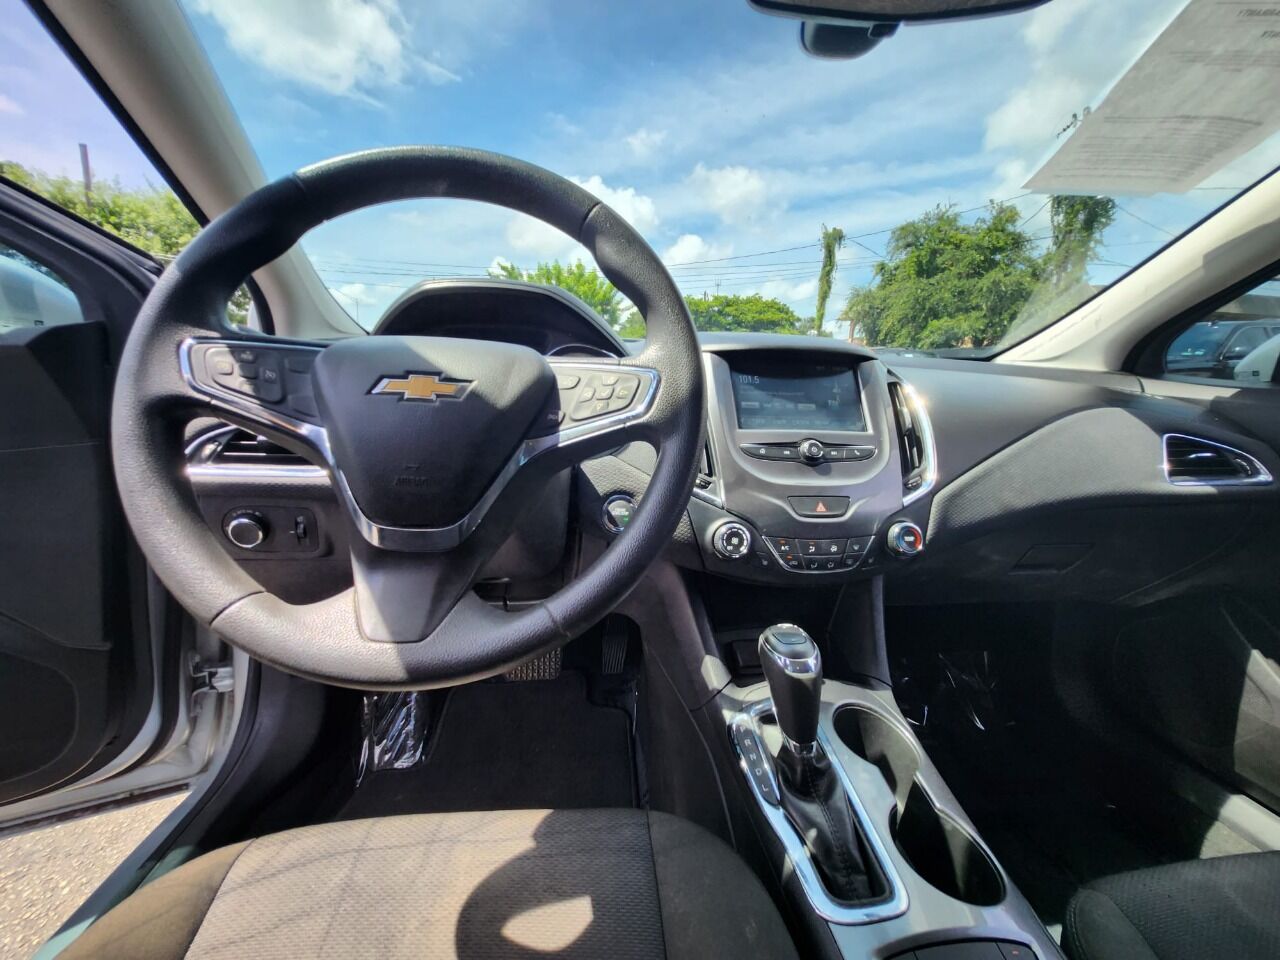 2018 CHEVROLET Cruze Sedan - $15,995